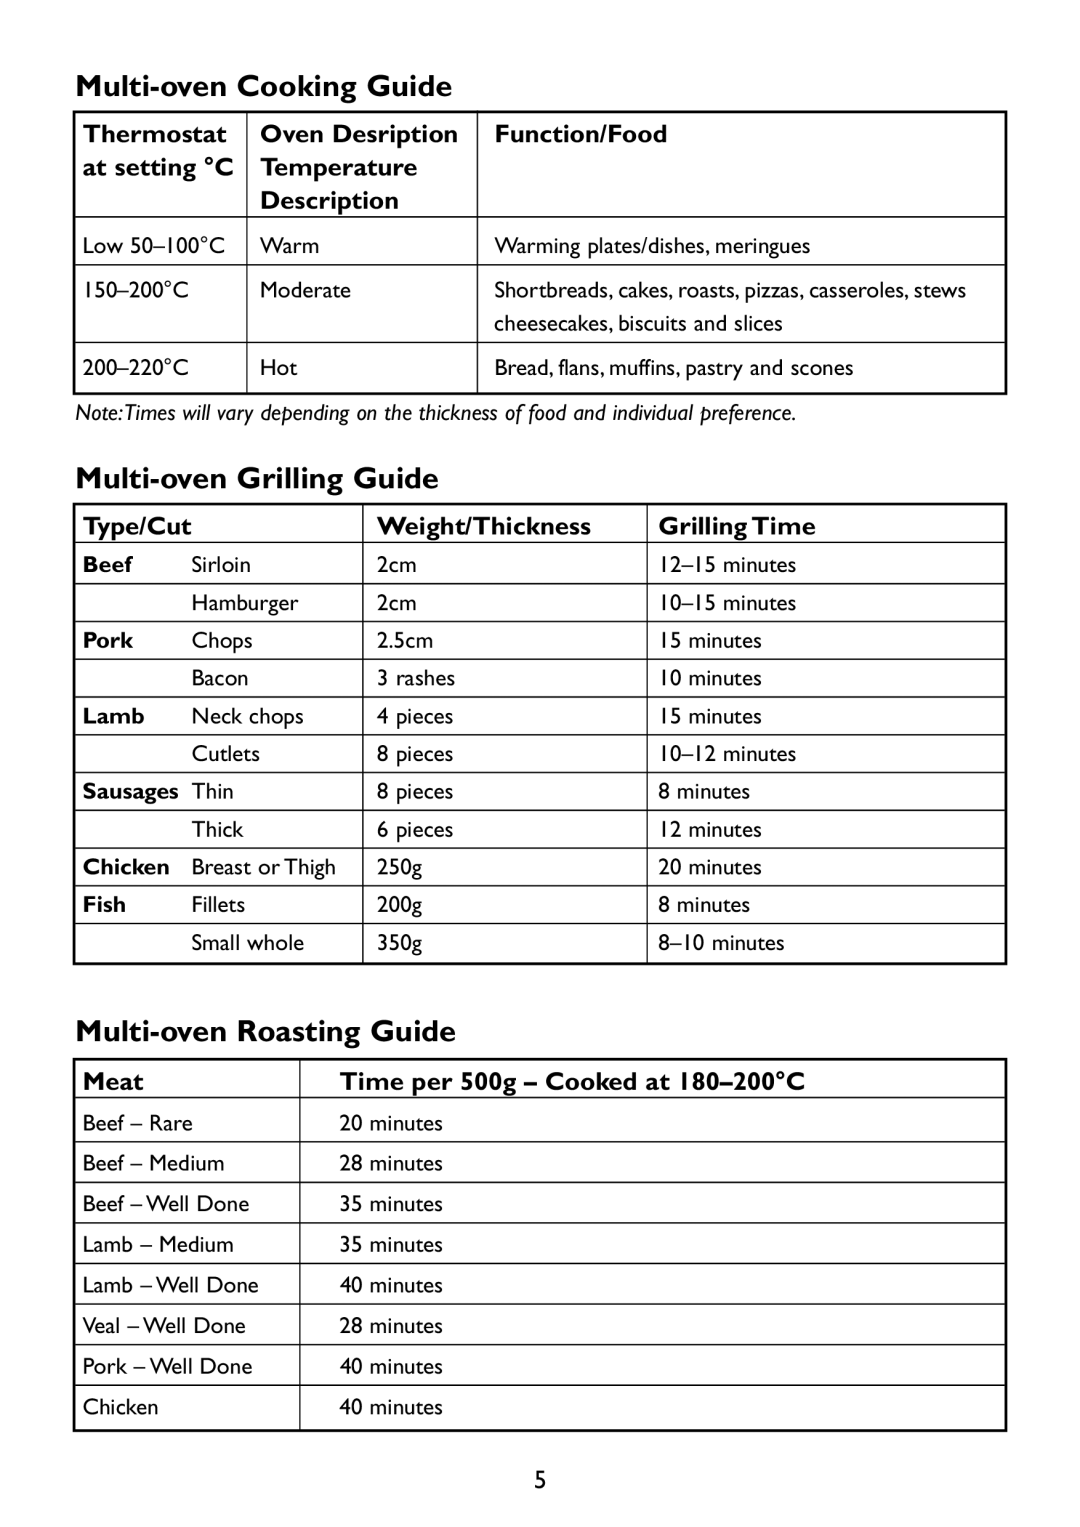 Kambrook KOT100 manual Multi-oven Cooking Guide, Multi-oven Grilling Guide, Multi-oven Roasting Guide 